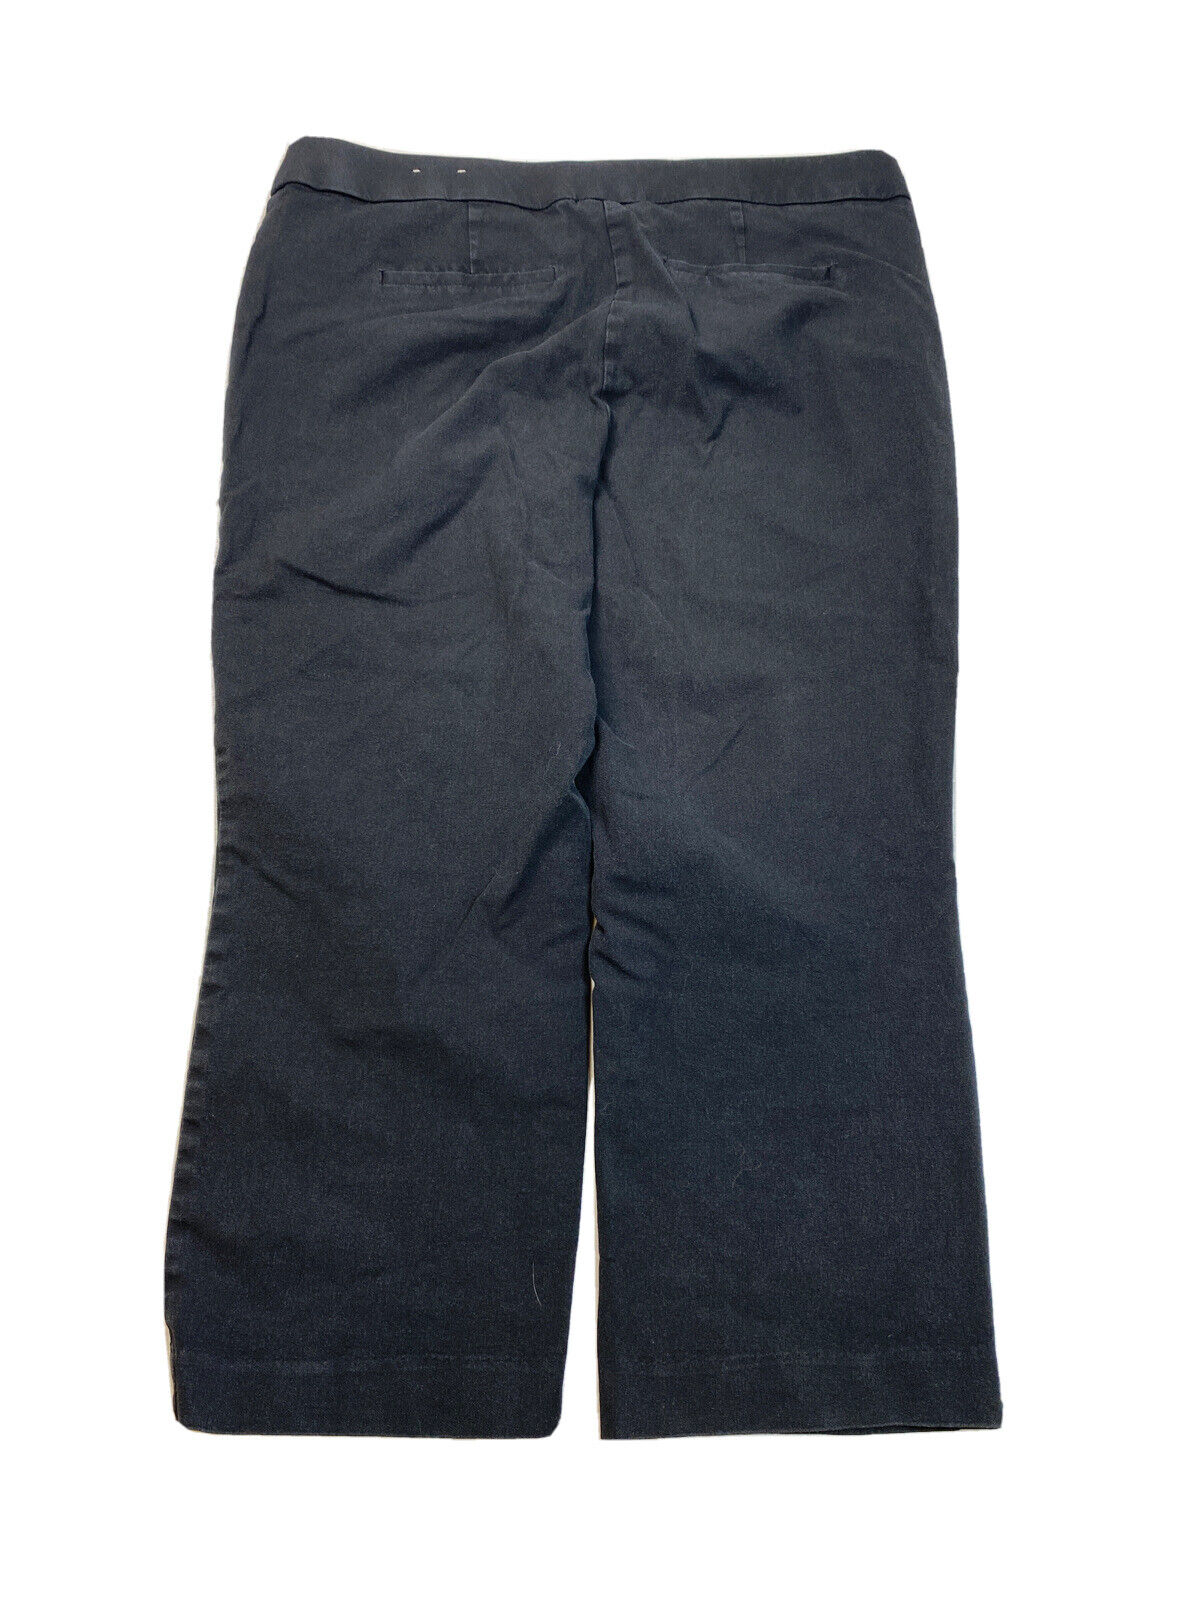 Chico's Women's Black Cotton Stretch Cropped Pants - 1.5/YS 10